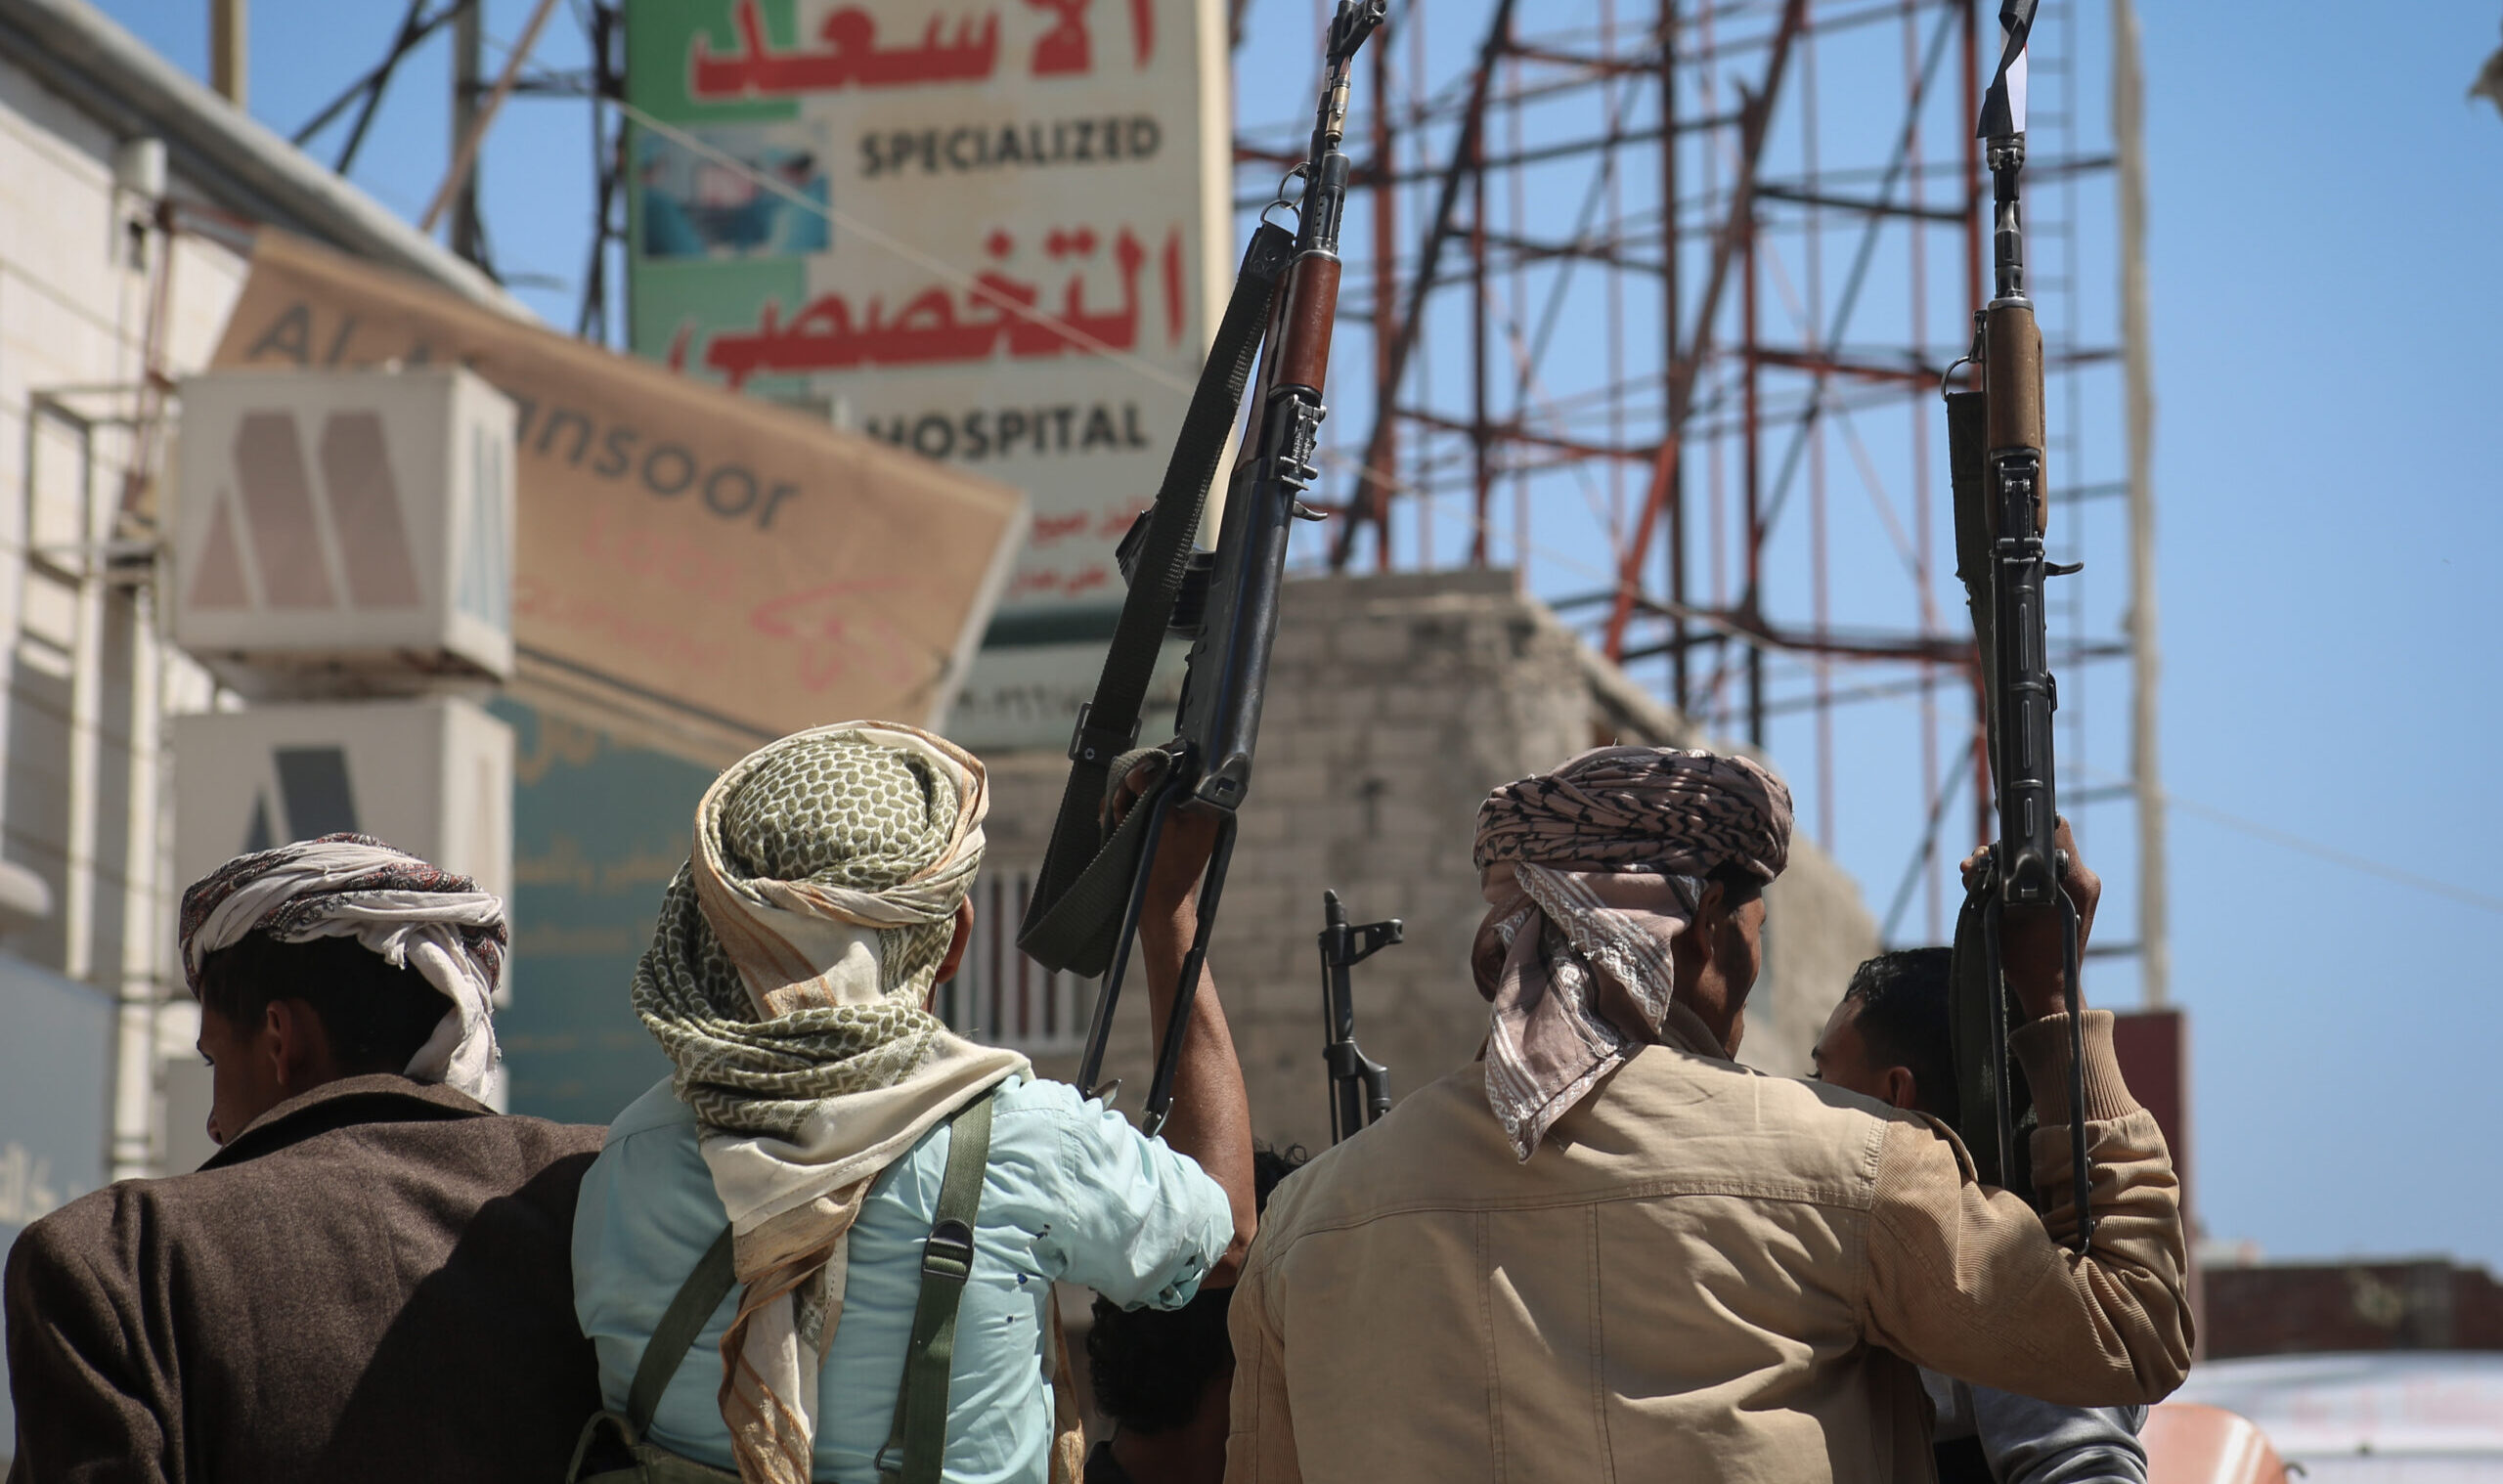 Yemen: Another Dangerous, Brutal, and Illegal War